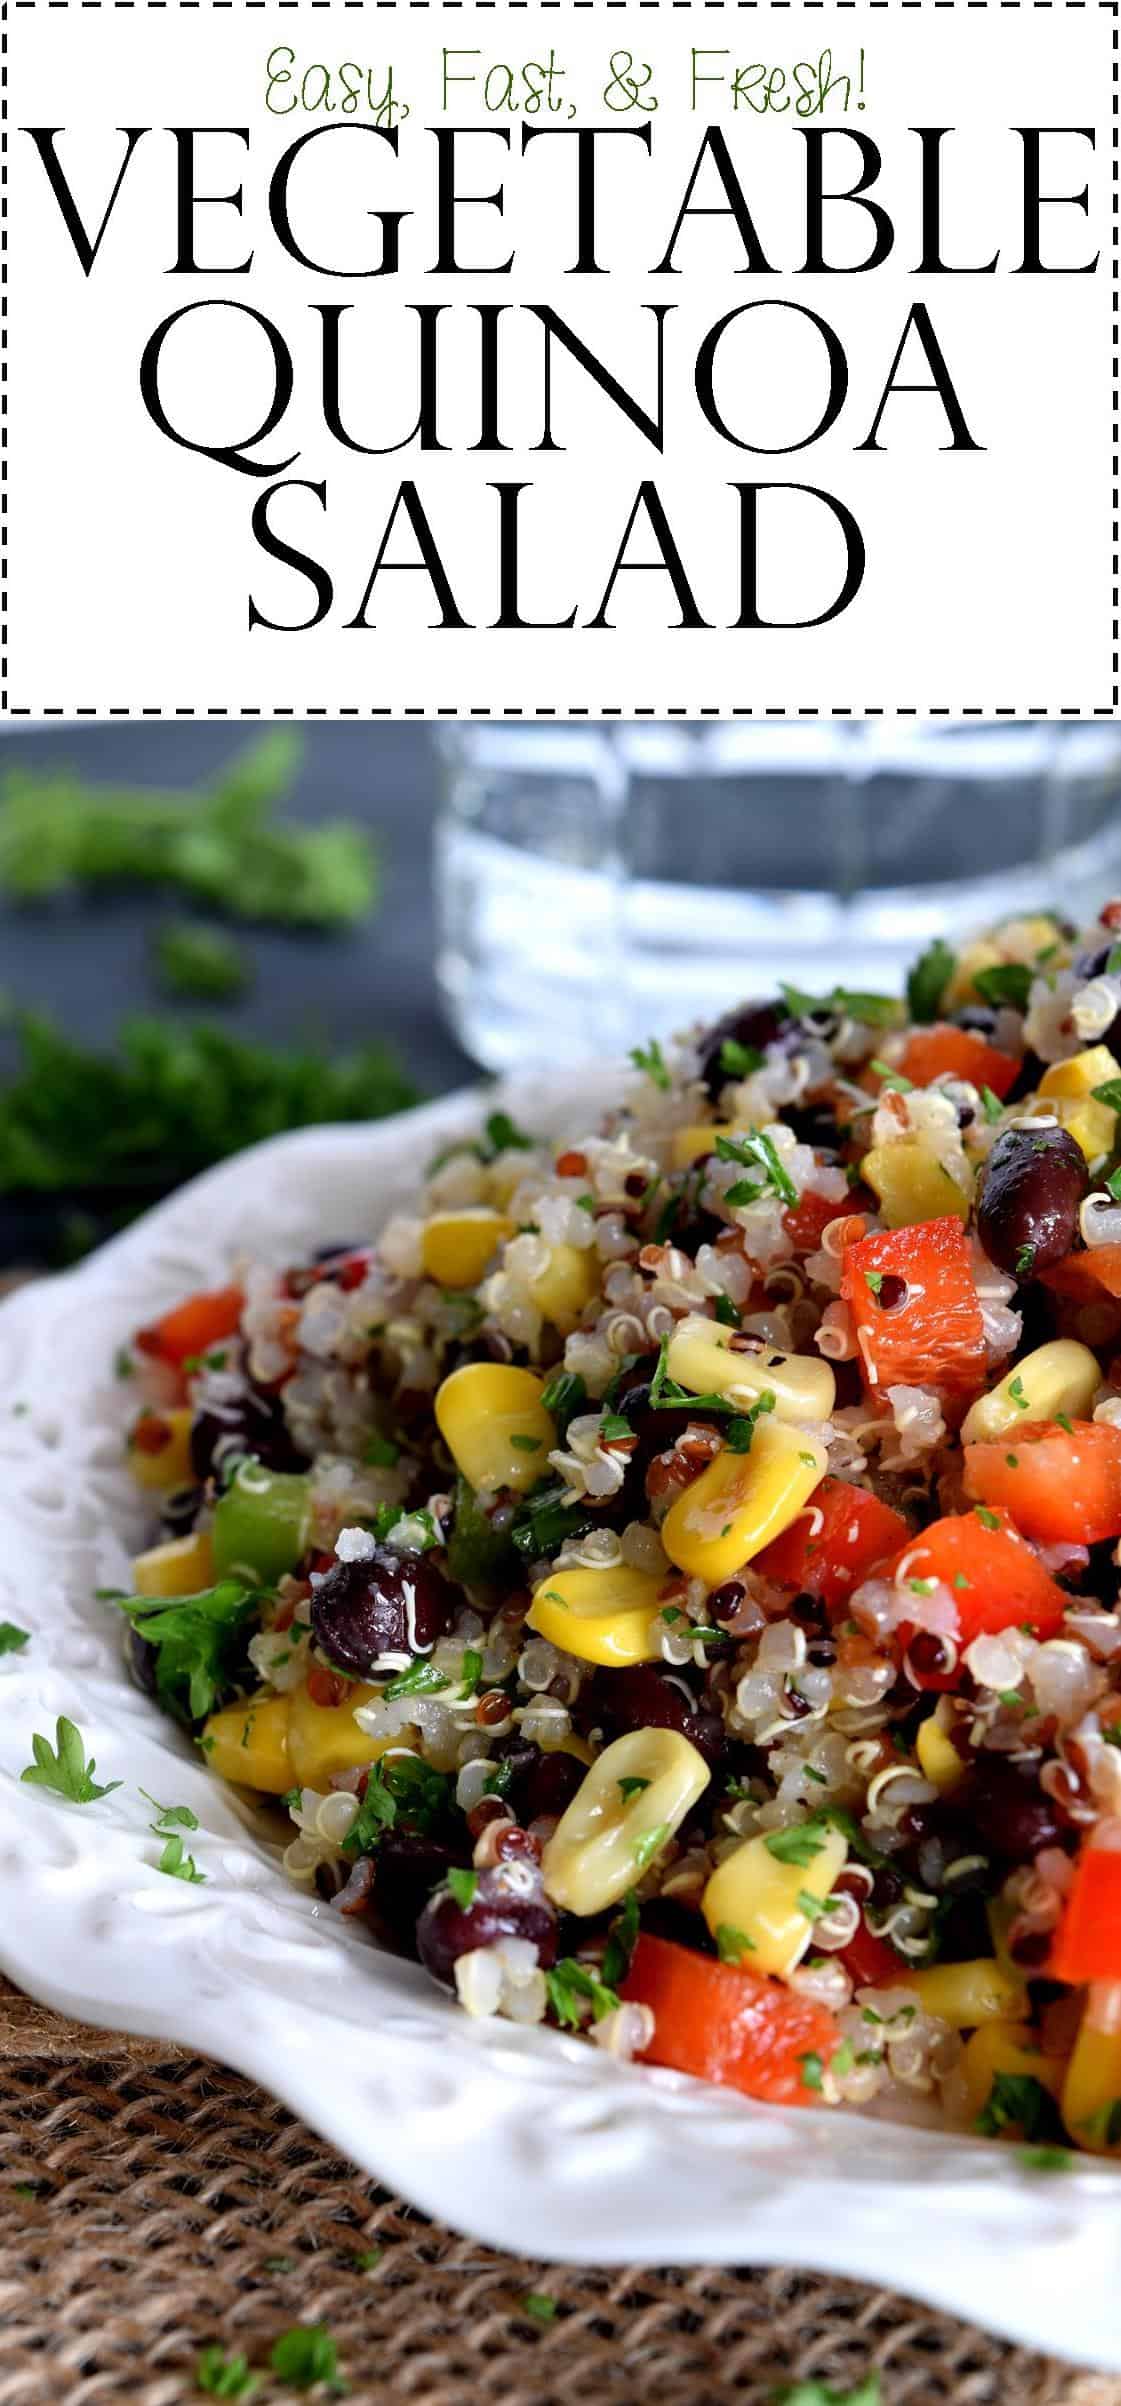 Vegetable Quinoa Salad - Lord Byron's Kitchen